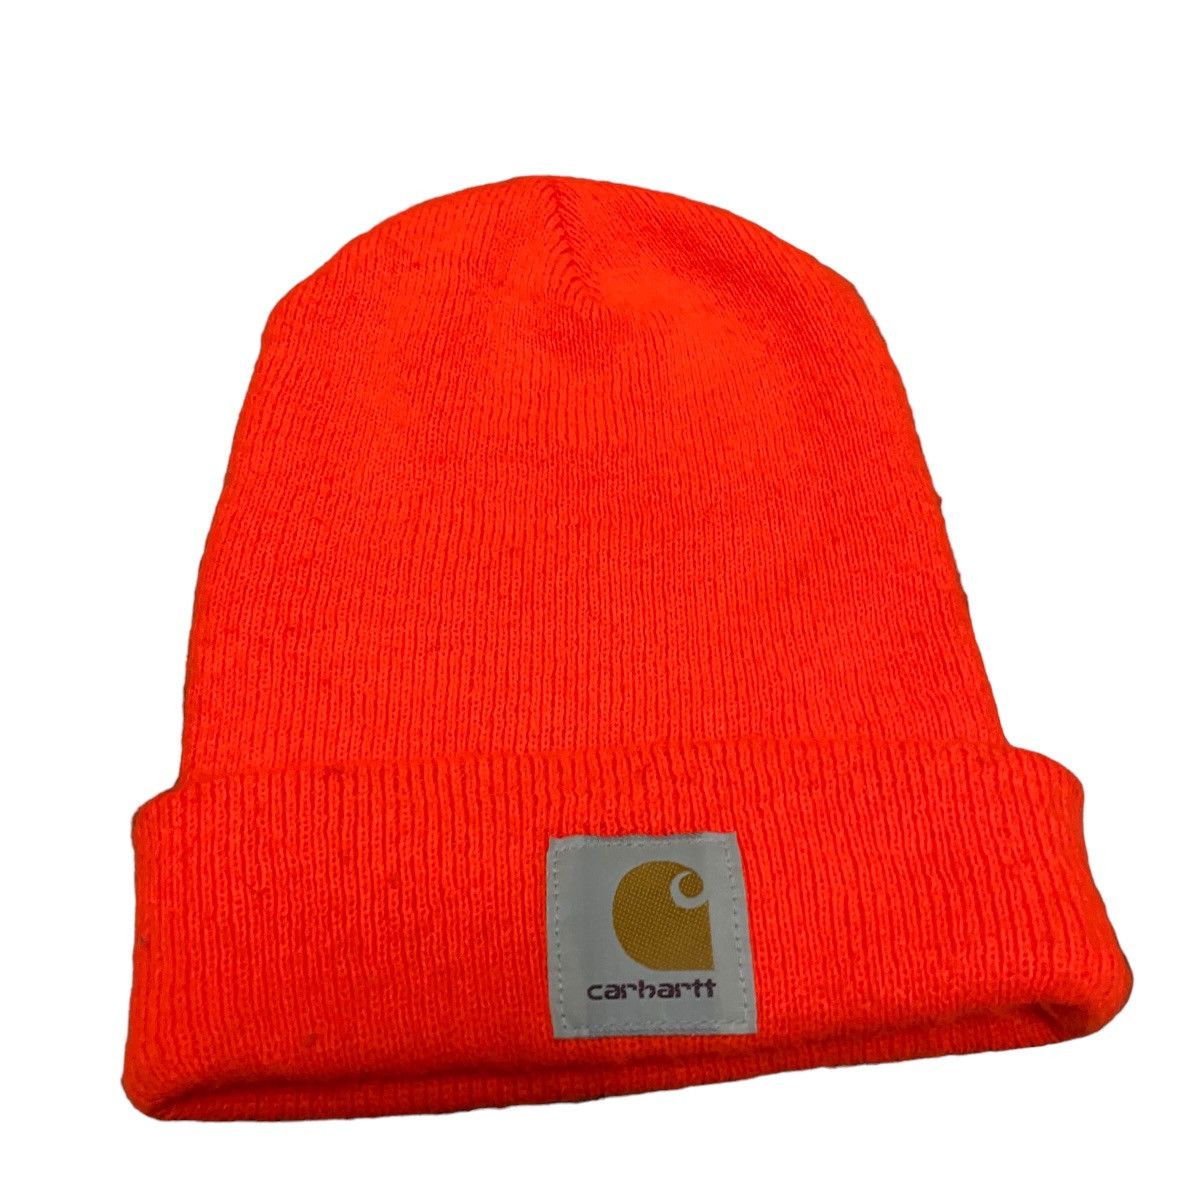 Vintage Carhartt Baenie Hat Orange Neo Colour - 1